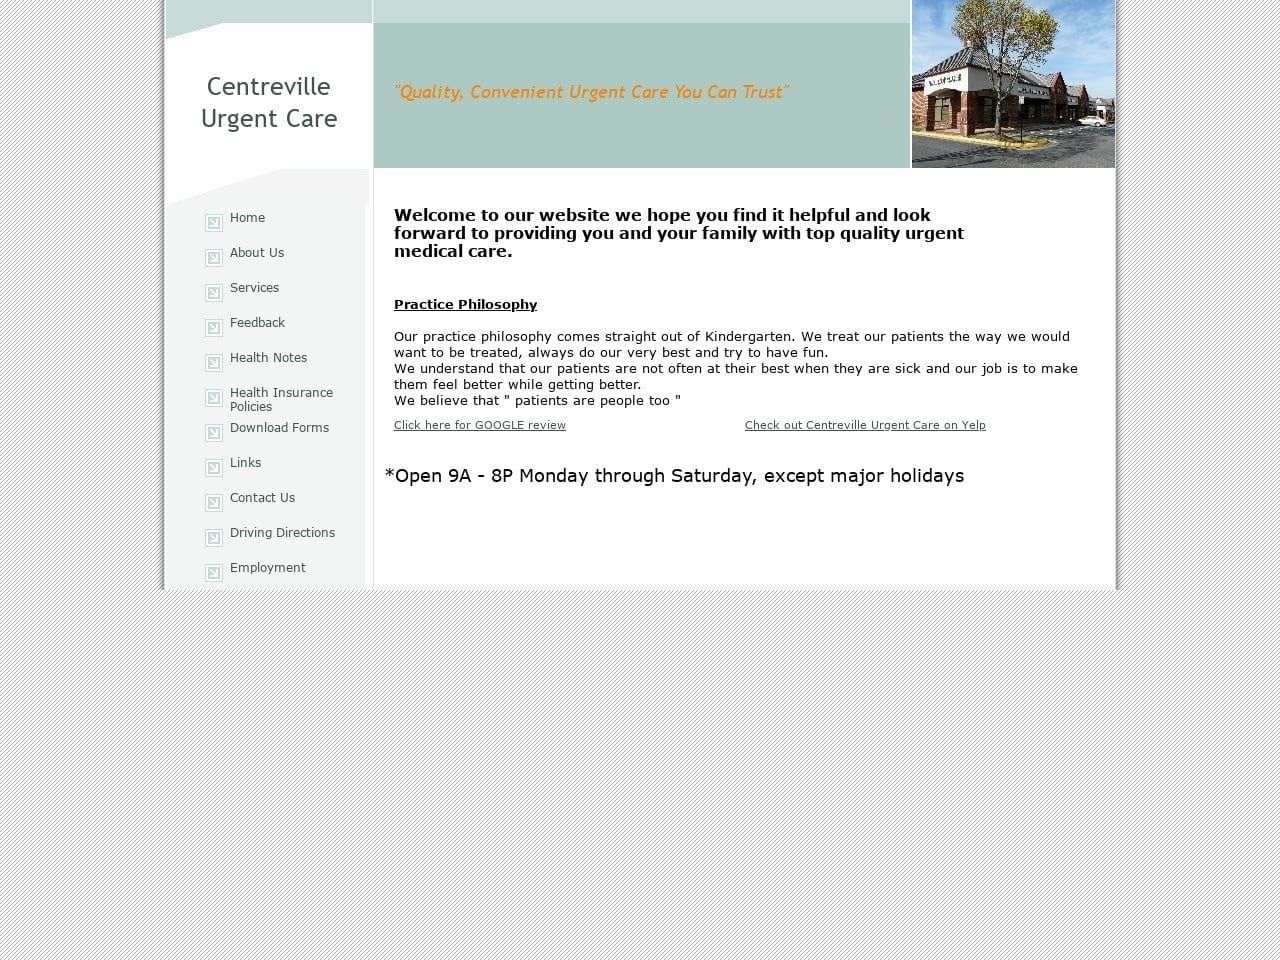 Centreville Urgent Care Website Screenshot from centrevilleurgentcare.com